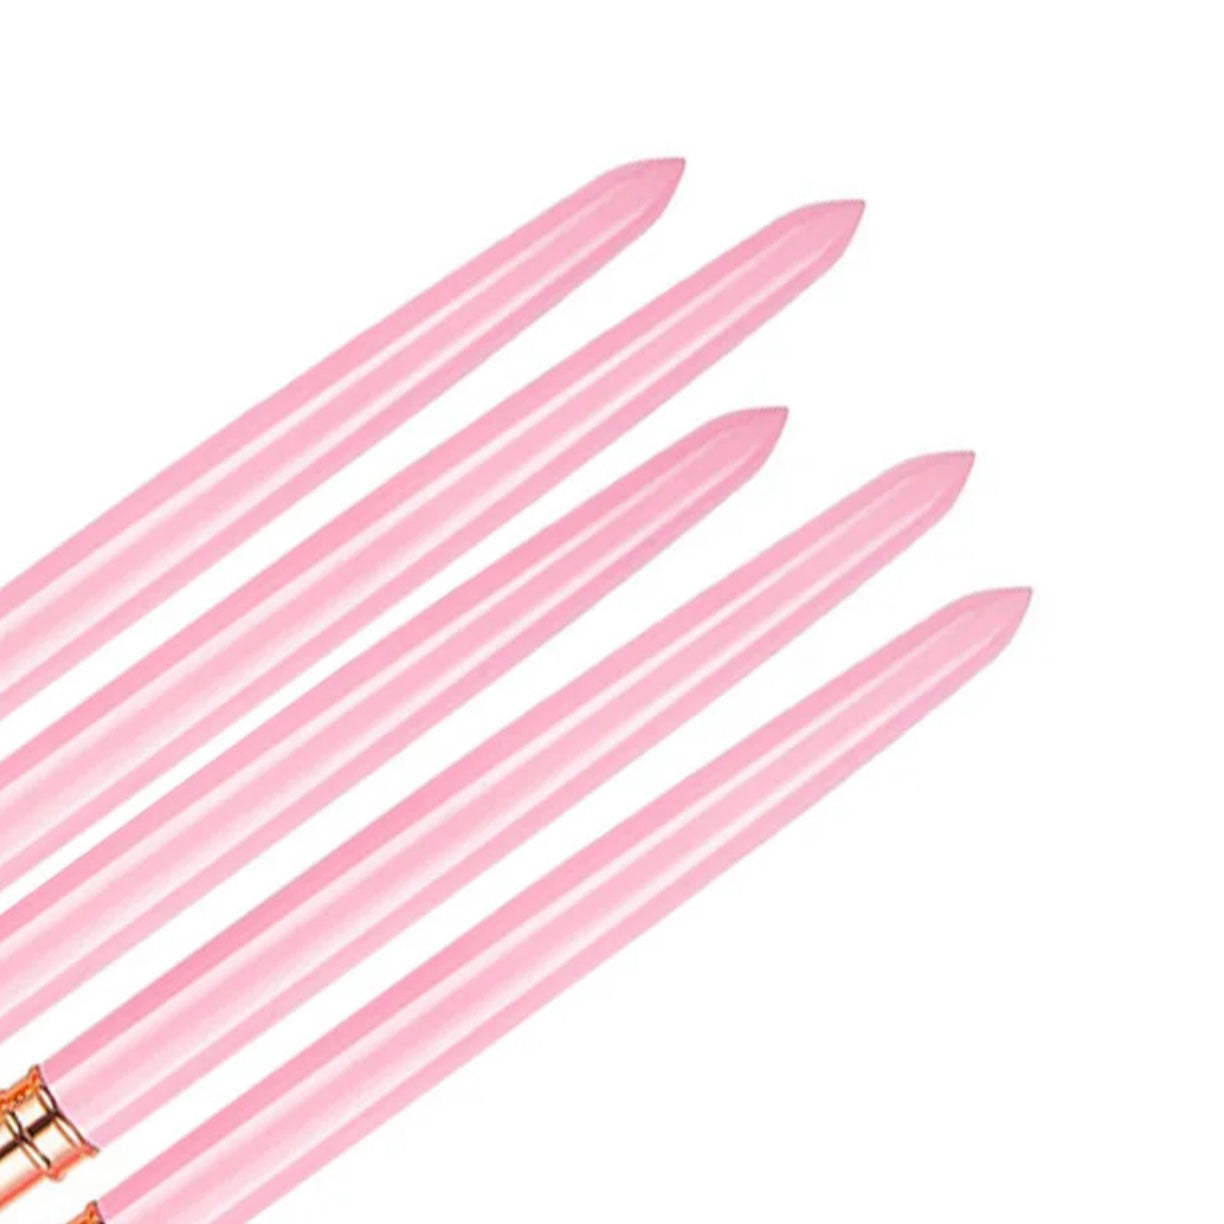 Pink Nail Art Brush - 20mm